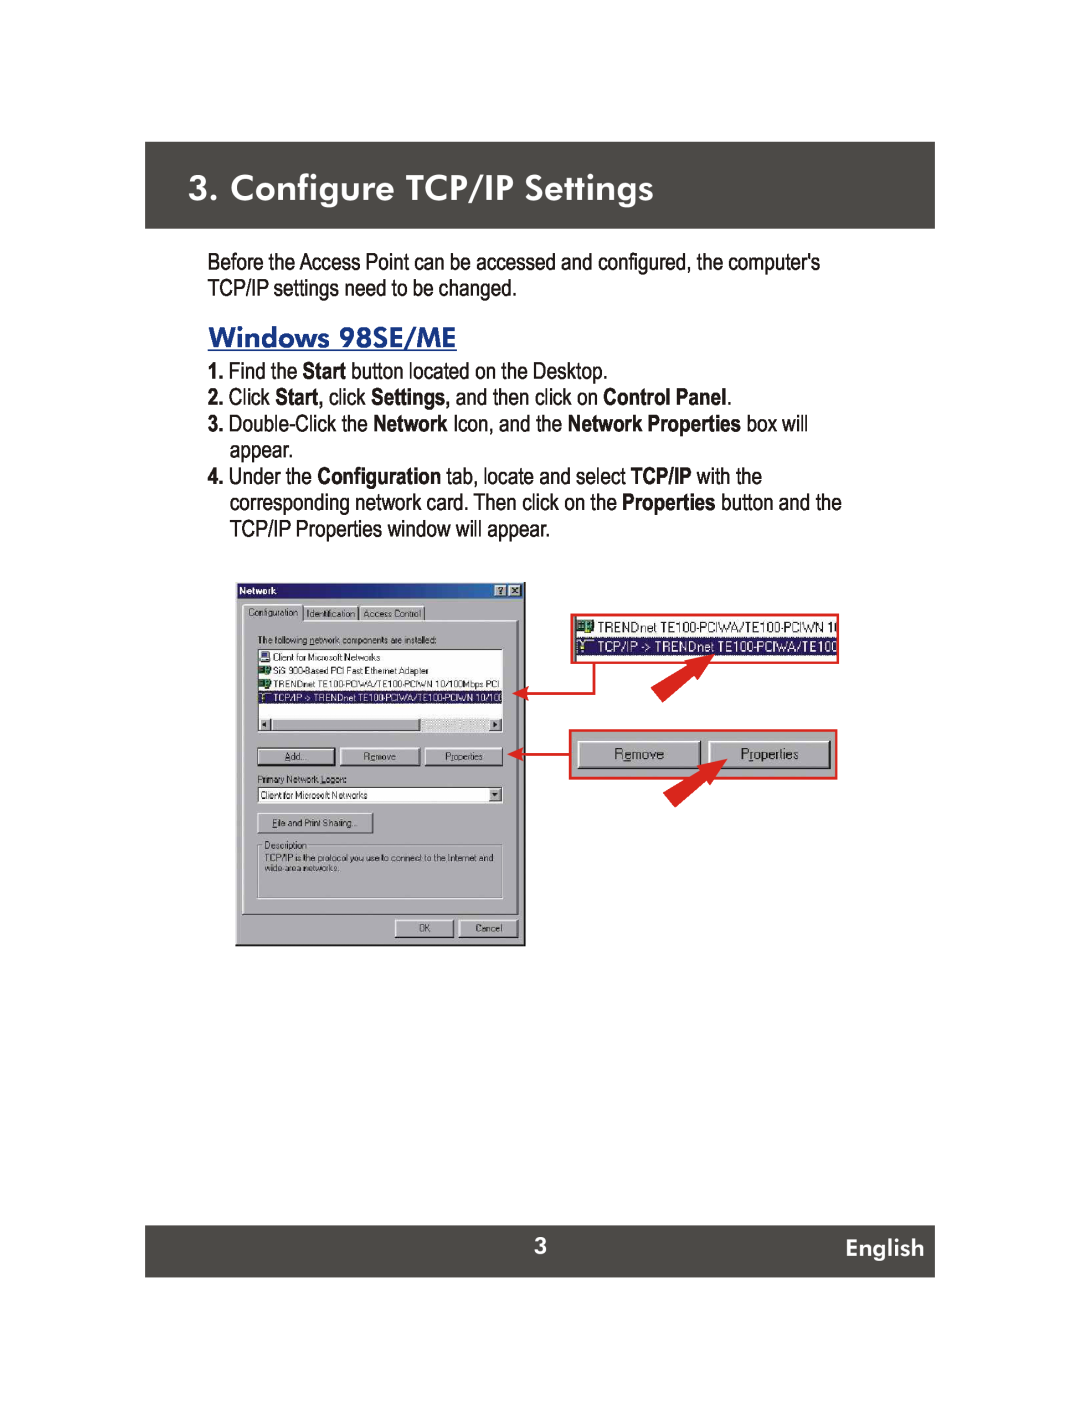 TRENDnet Net Spot Wireless Access Point, TEW-453APB manual Configure TCP/IP Settings, Windows 98SE/ME, English 